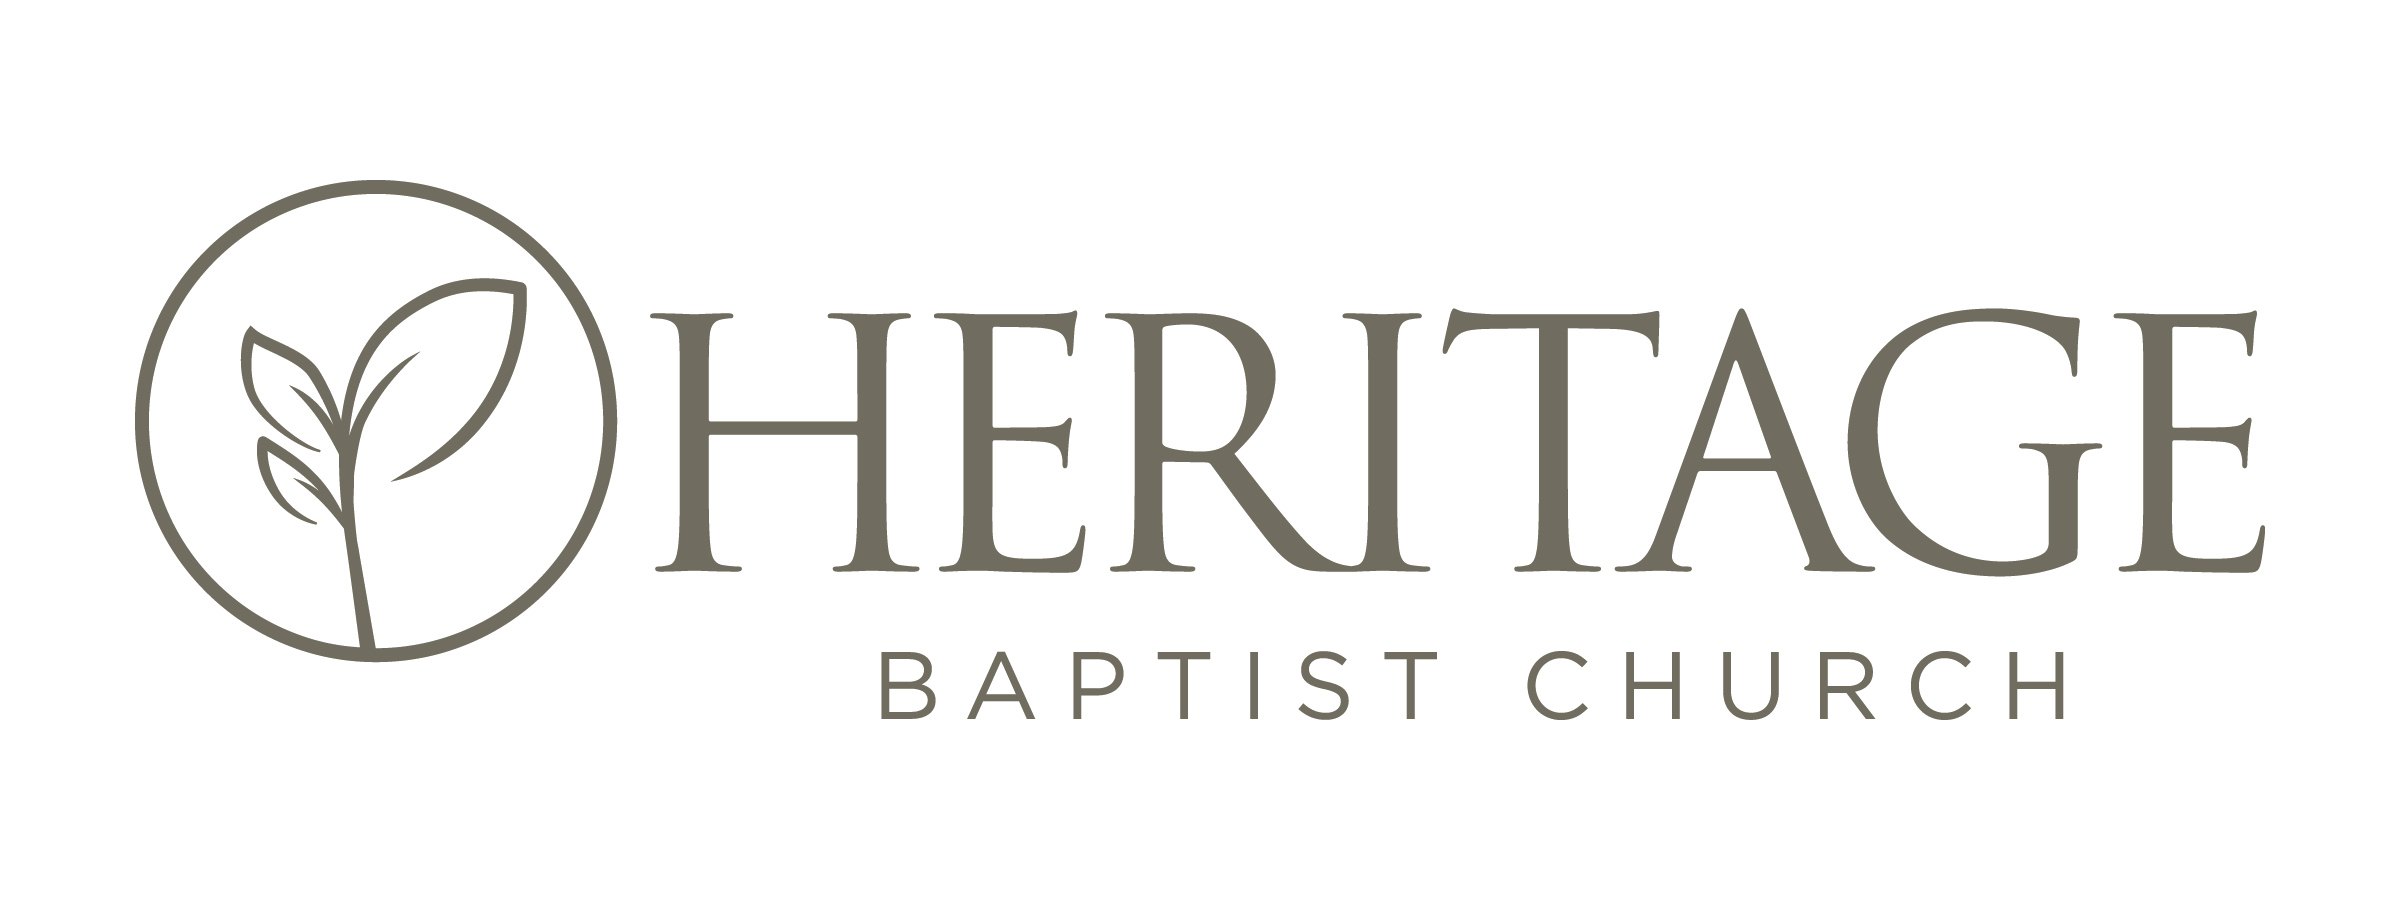 HERITAGE Baptist Church